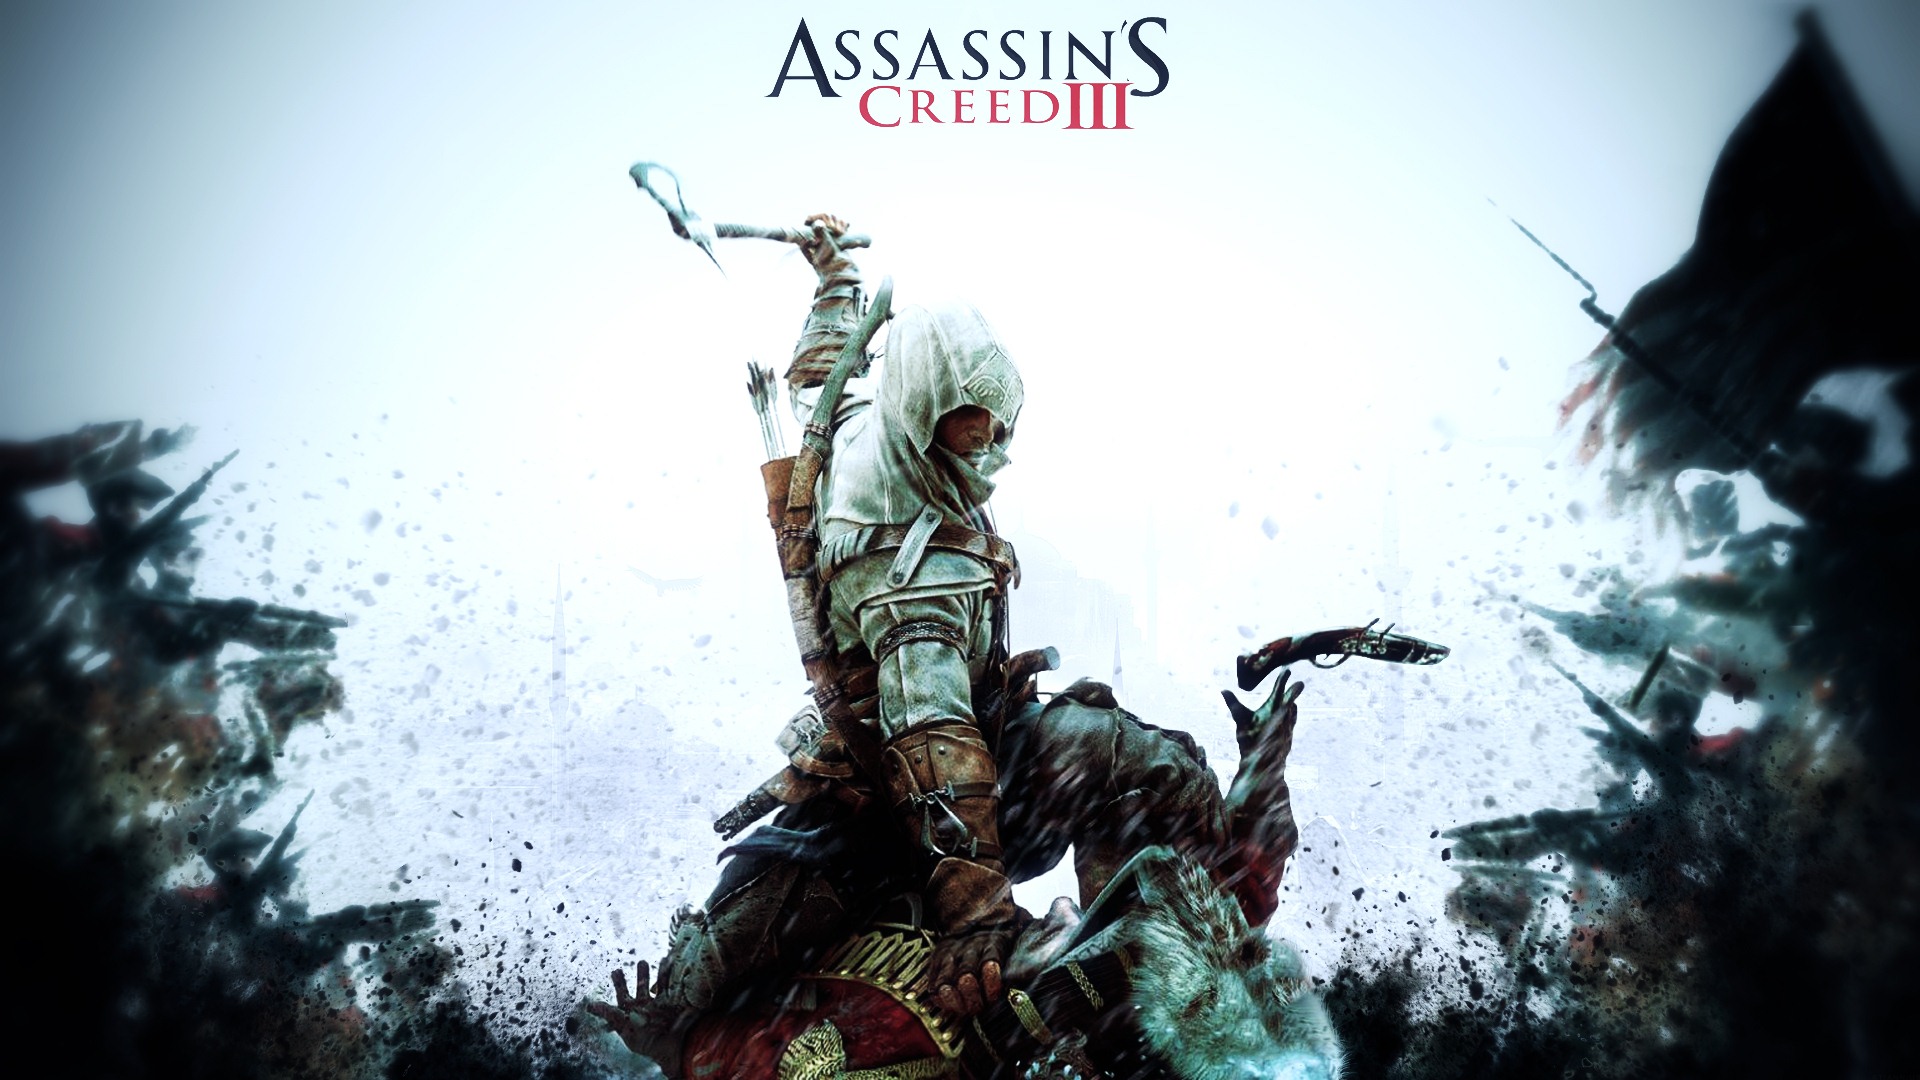 Assassins Creed III HD Wallpaper #15 - 1920x1080